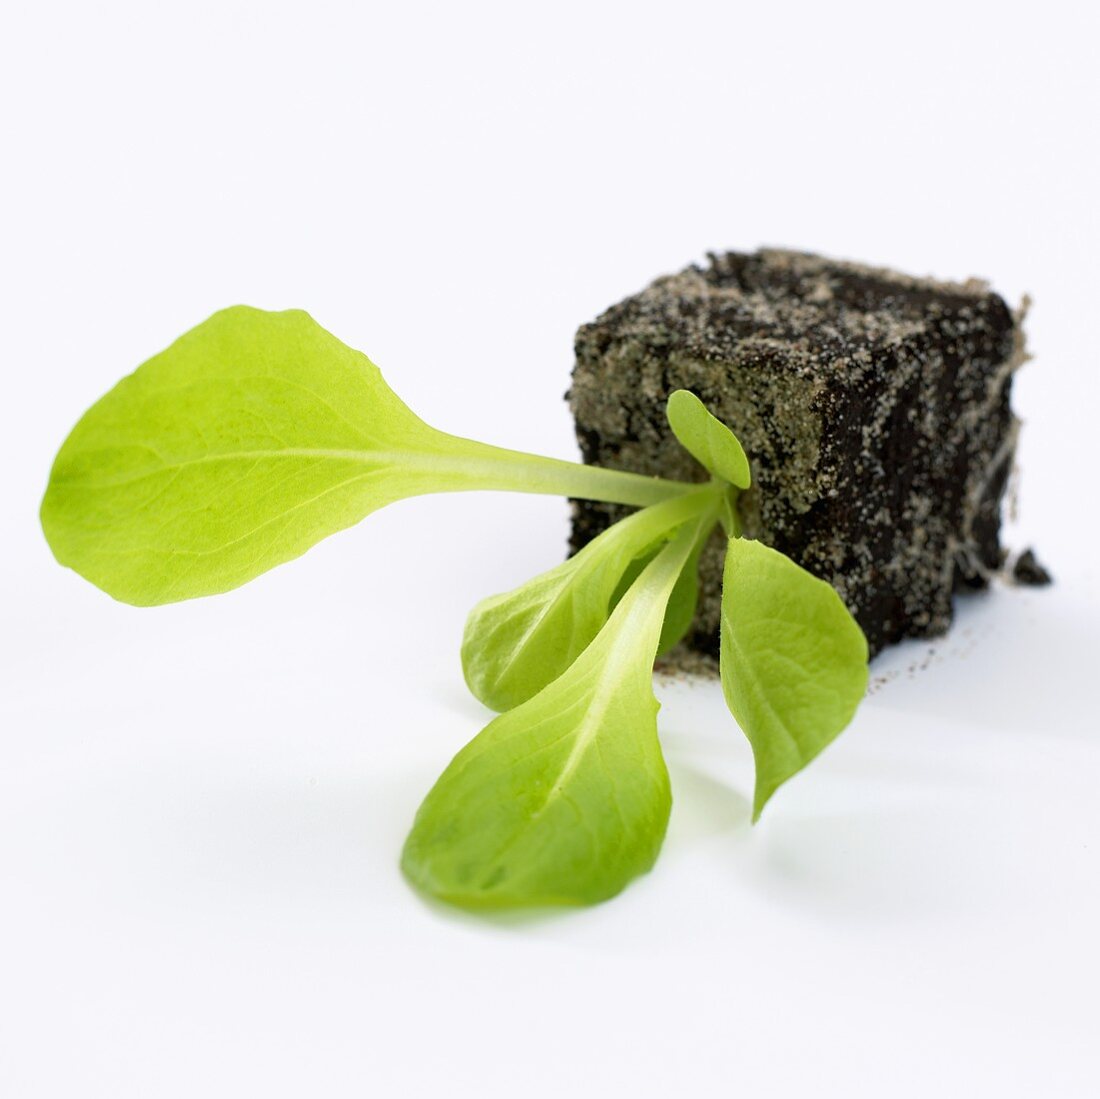 Junge Salatpflanze (Lactuca sativa)